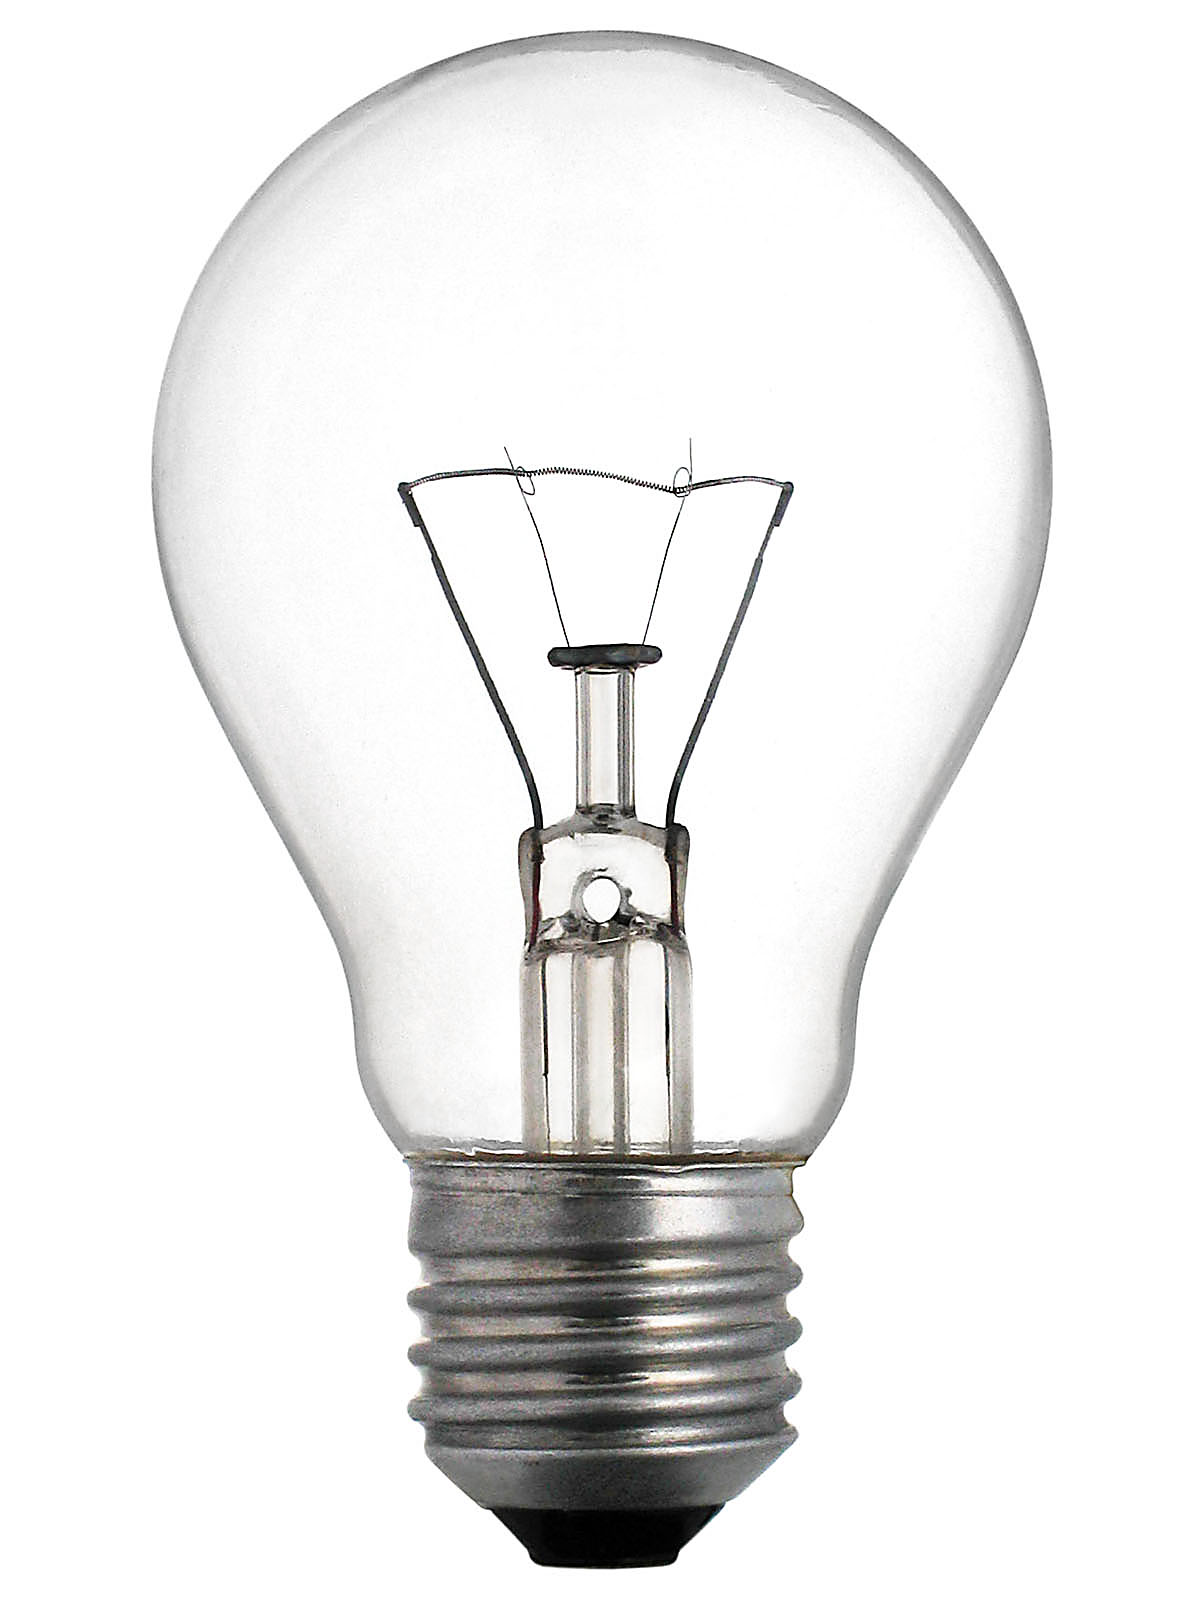 Thomas Edison, Edison's light bulb could be on endangered list ...